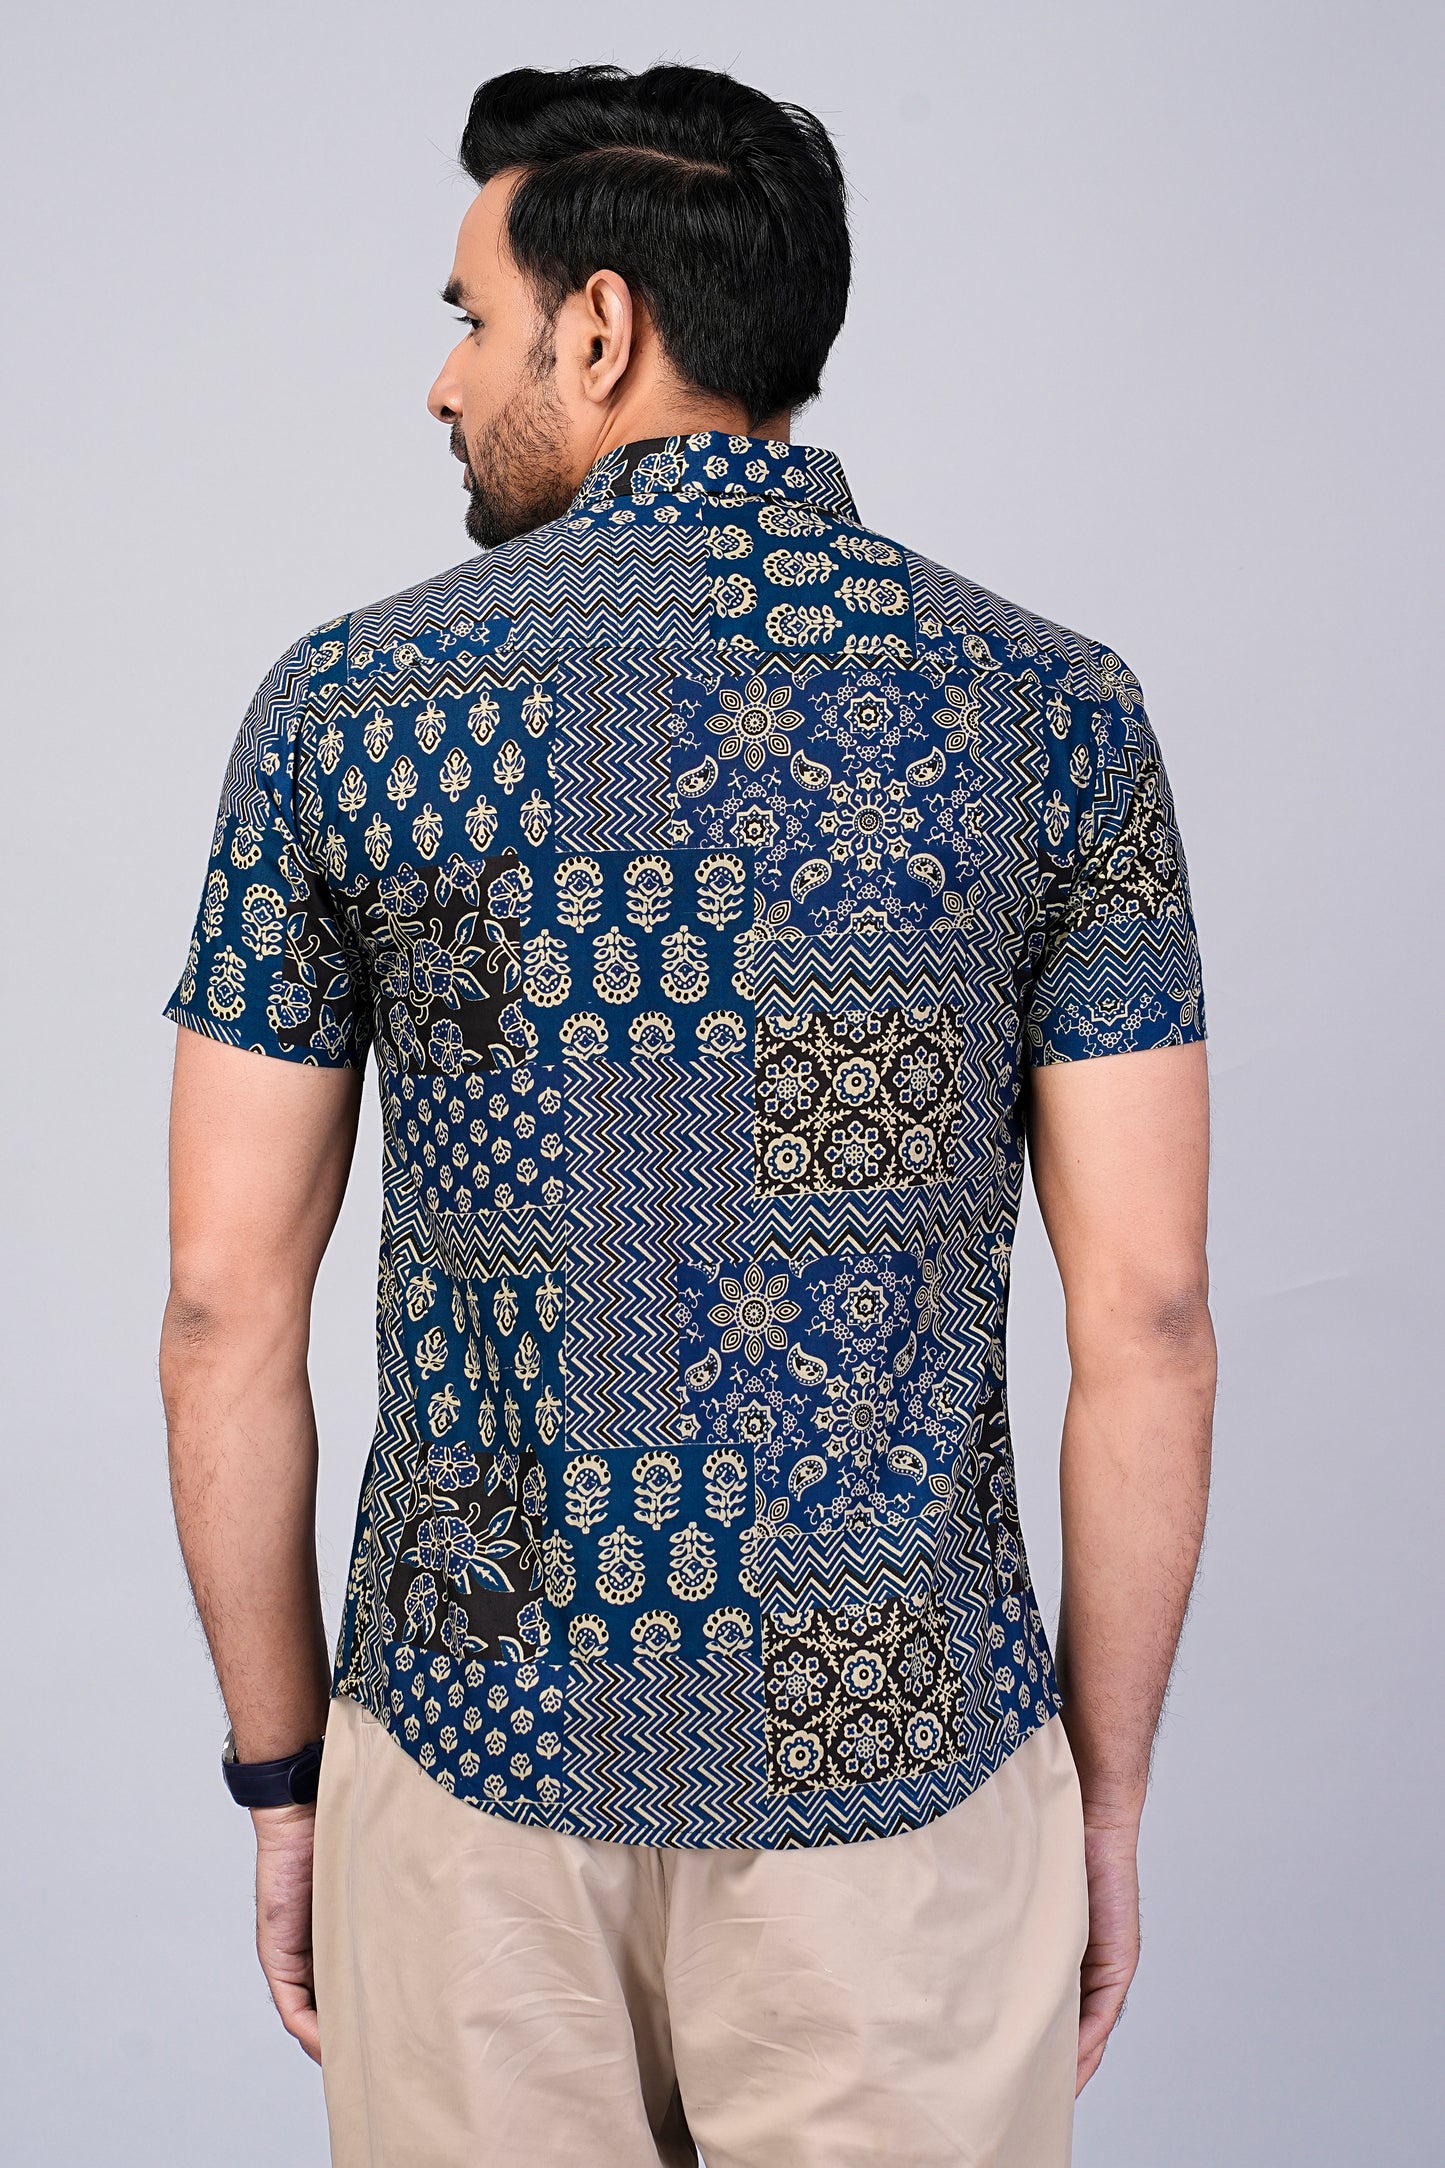 Men's Patch Work Printed Half-Sleeves shirts